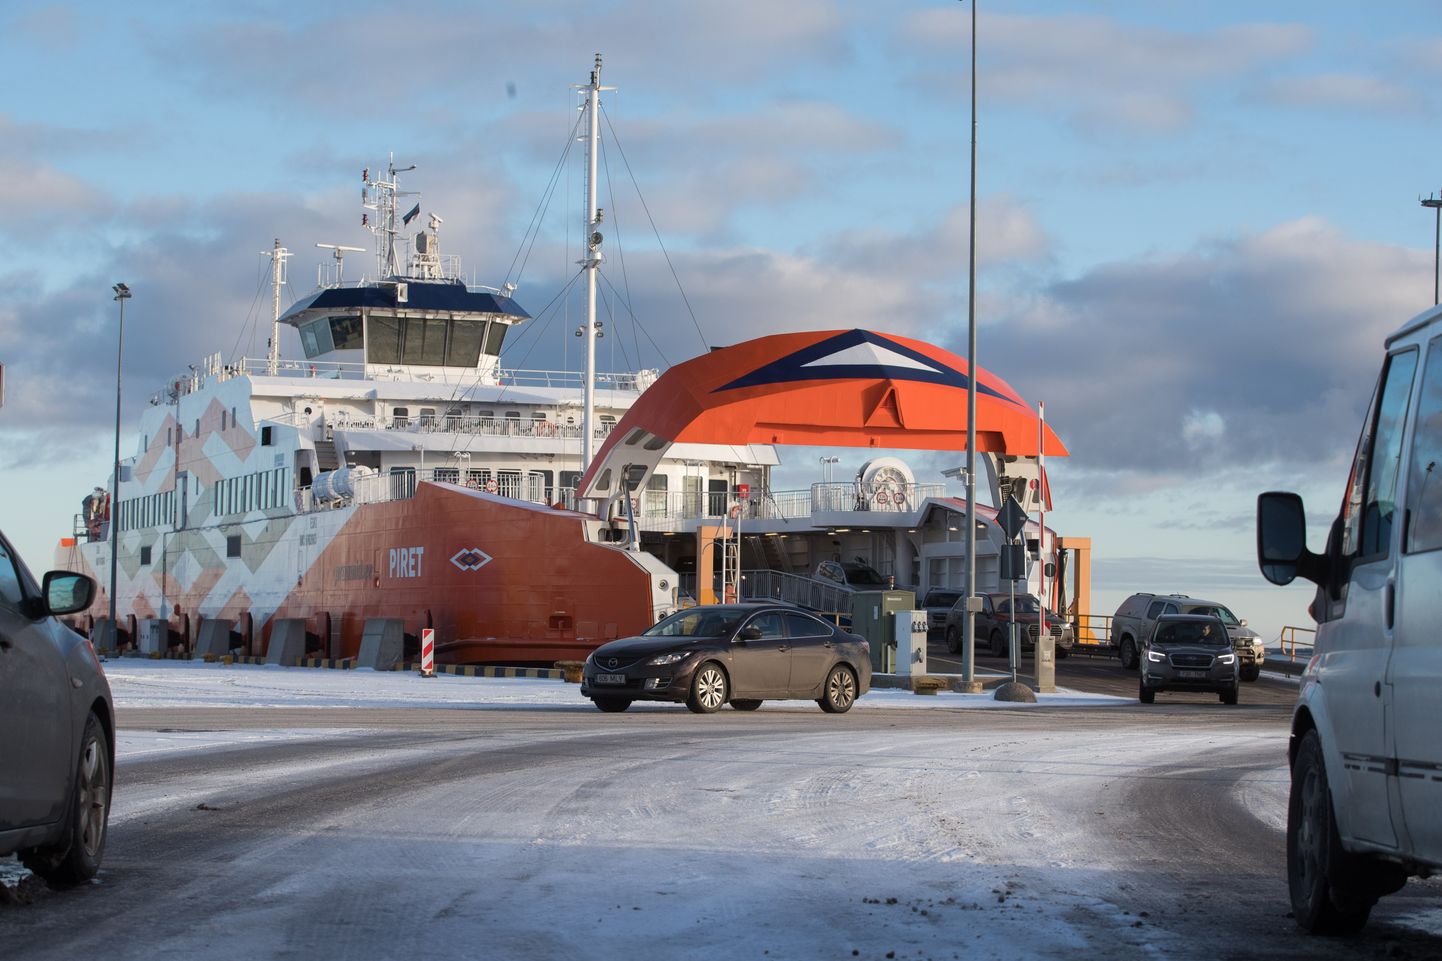 Kuressaare, EESTI 28NOV18
Fotol parvlaev Piret

Ferries to Estonian islands.
Foto Tairo Lutter/EESTI MEEDIA